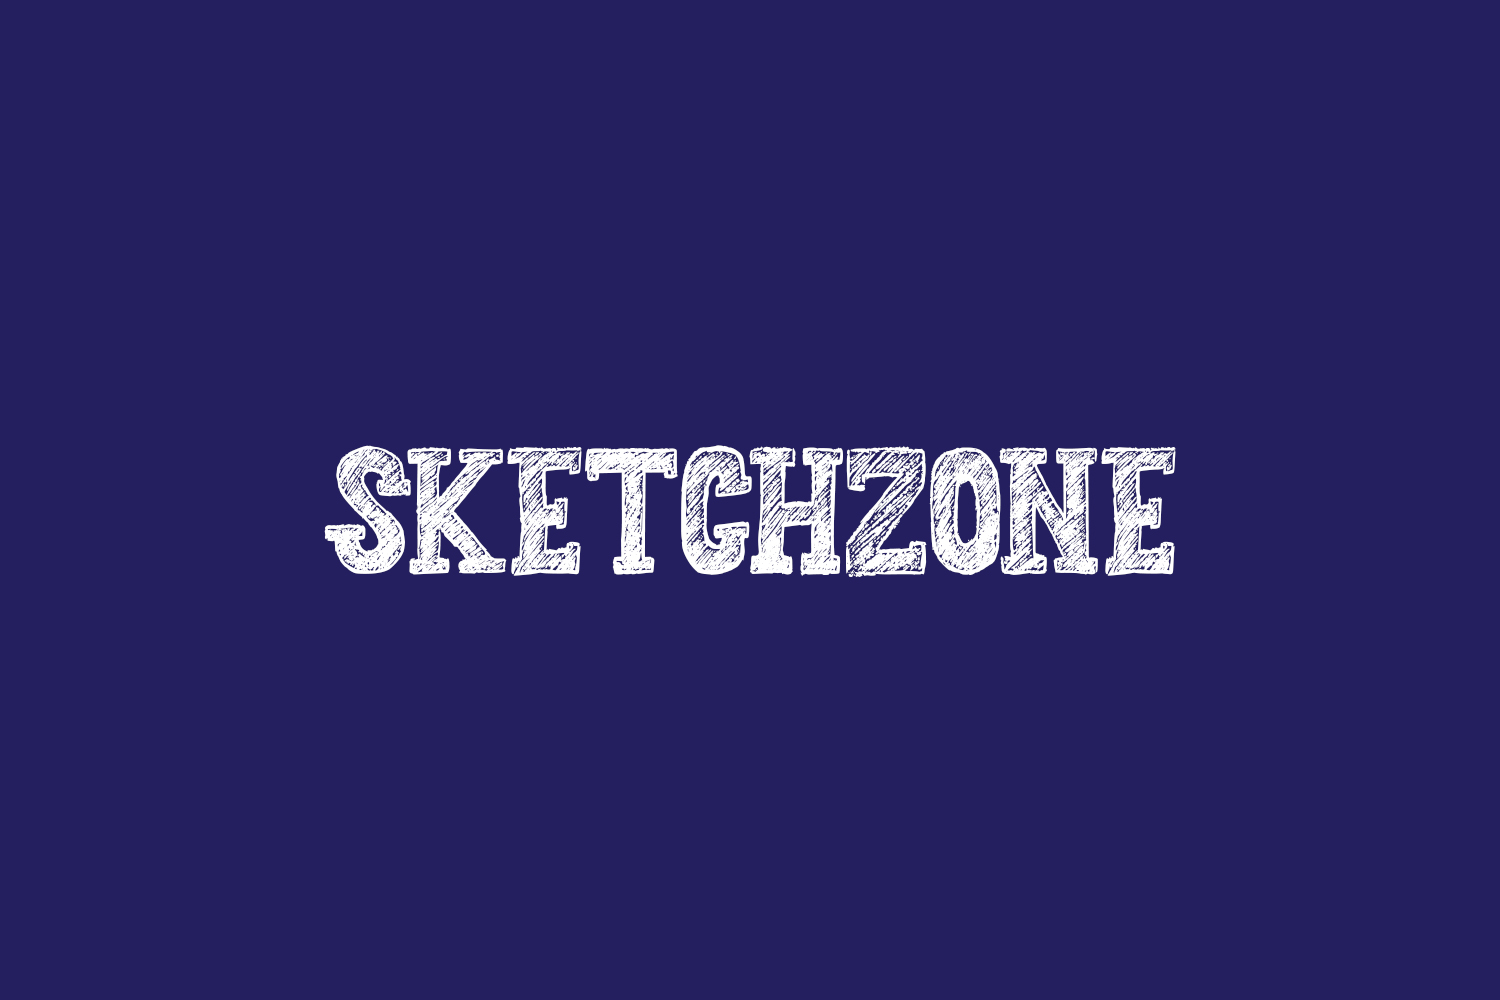 Sketchzone Free Font